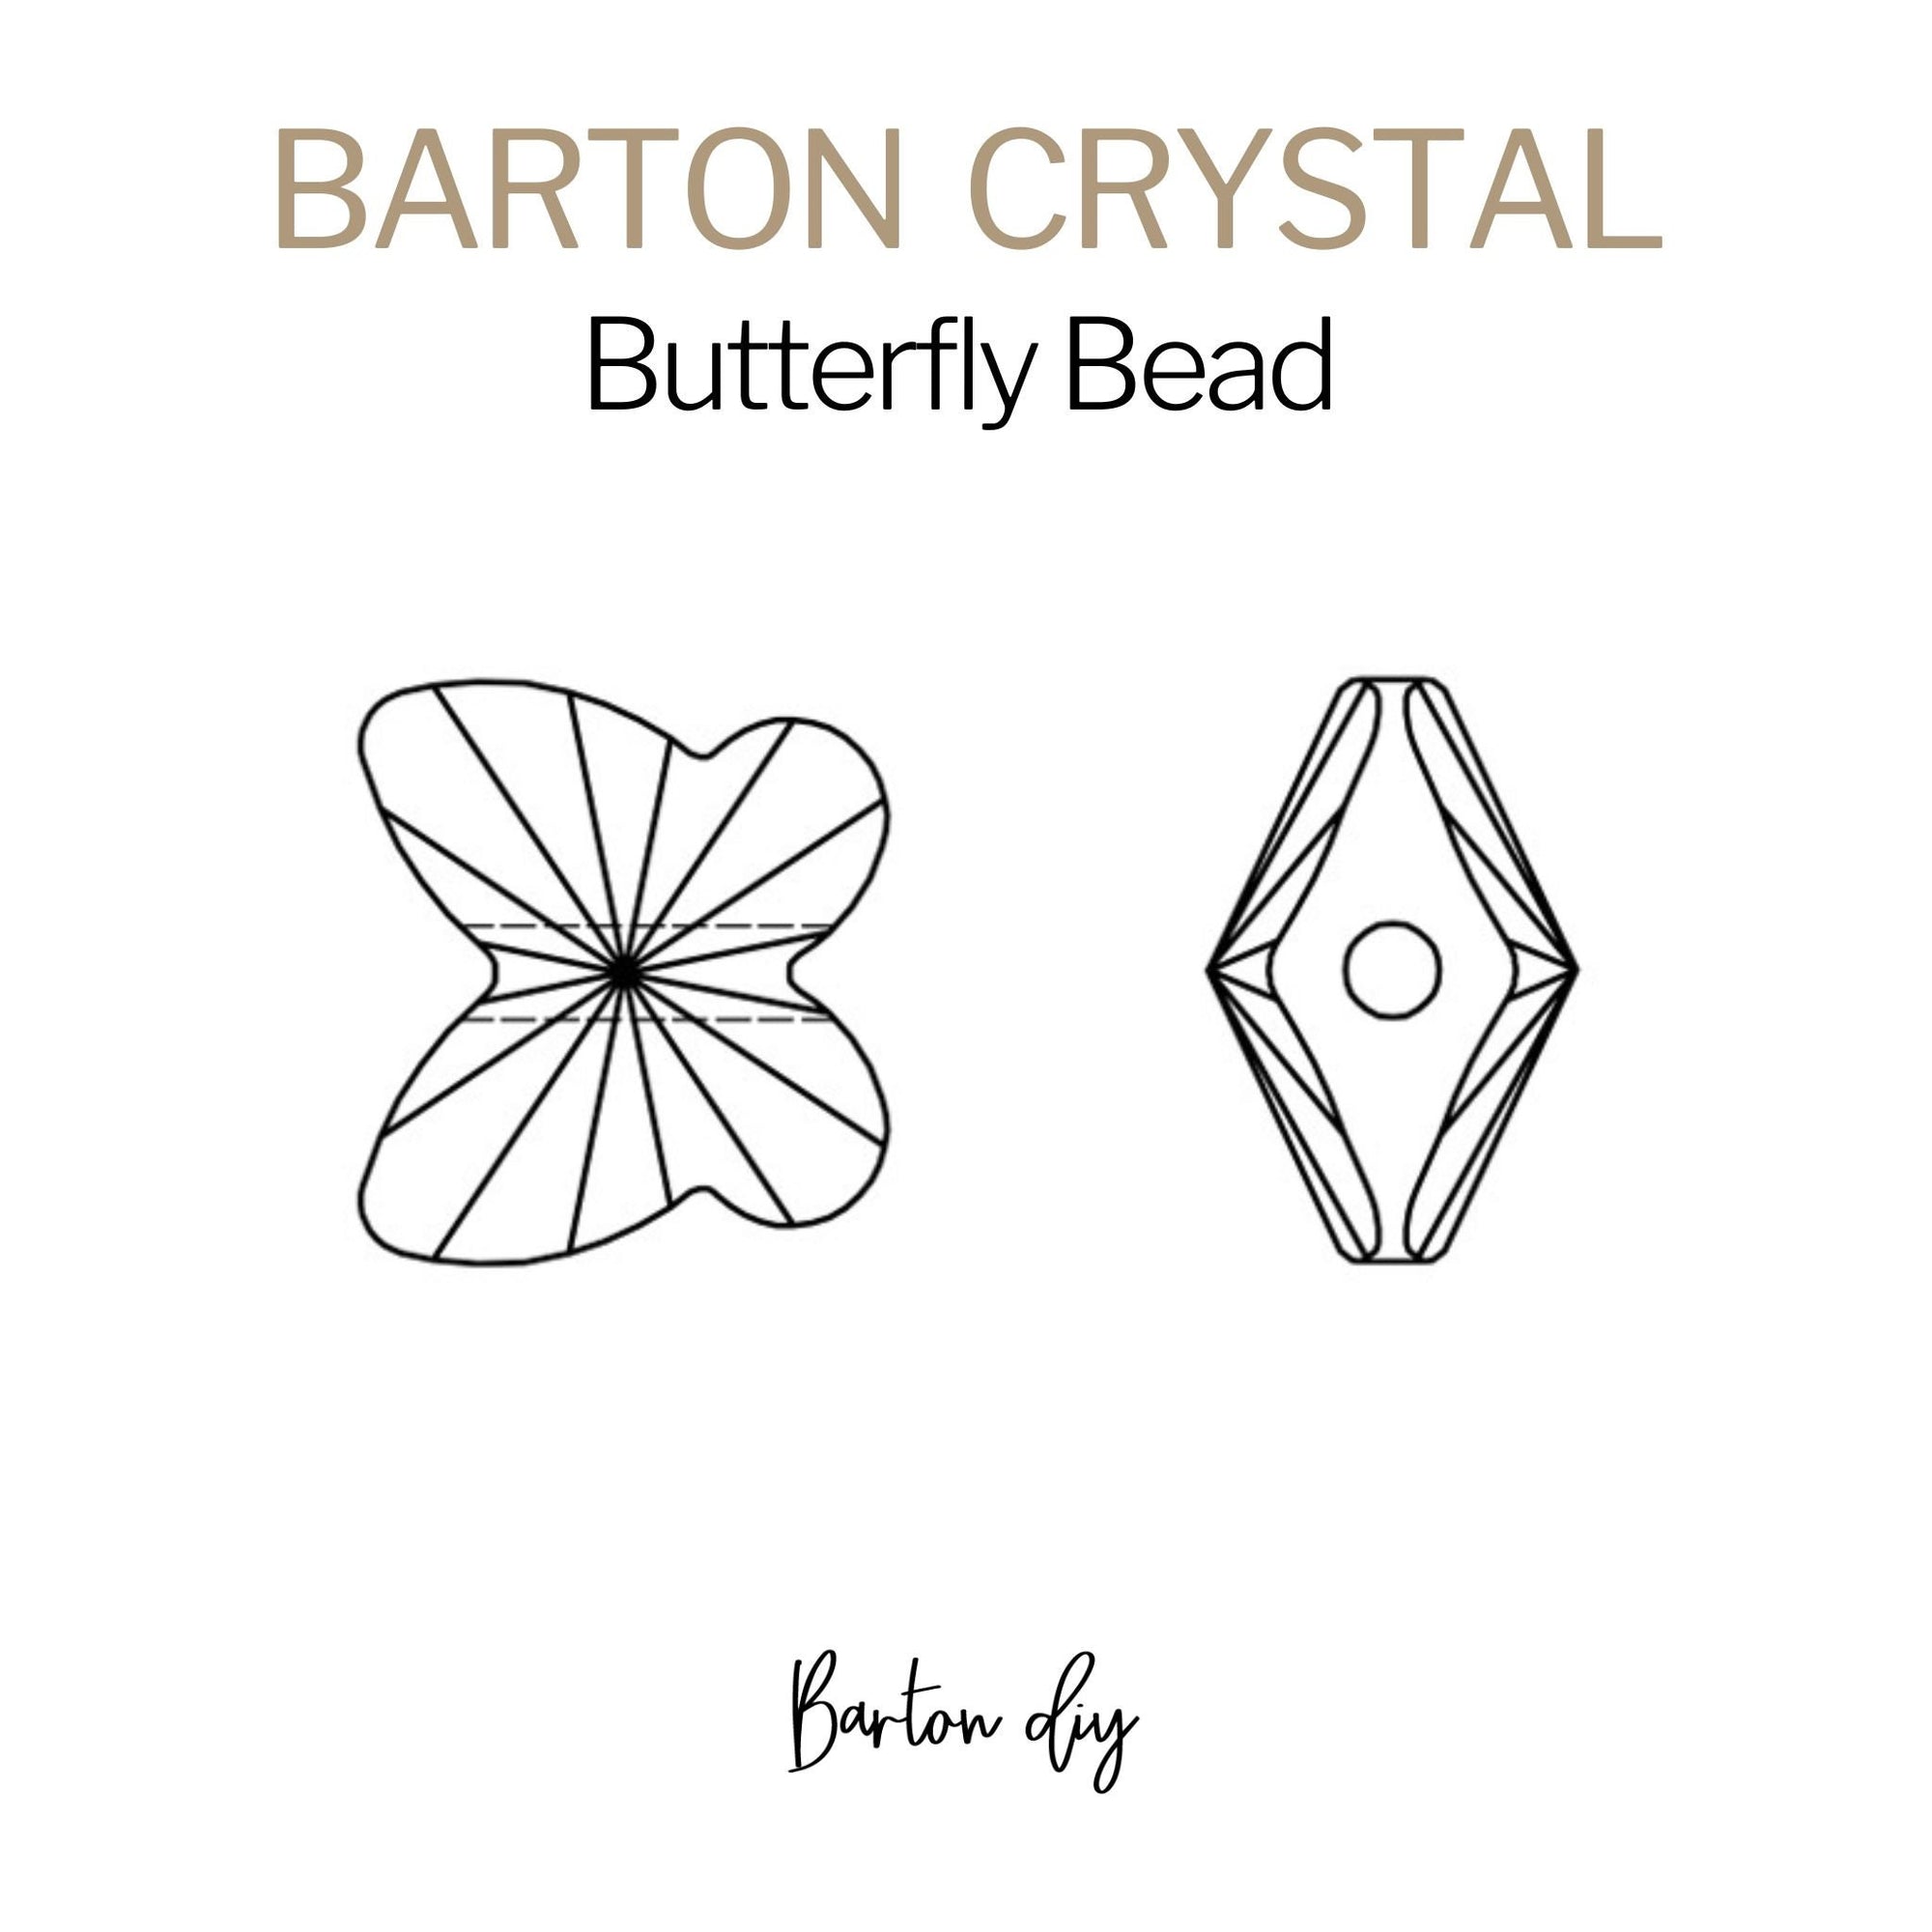 Crystal AB Large Hole Butterfly Bead 5954 Barton Crystal 14mm